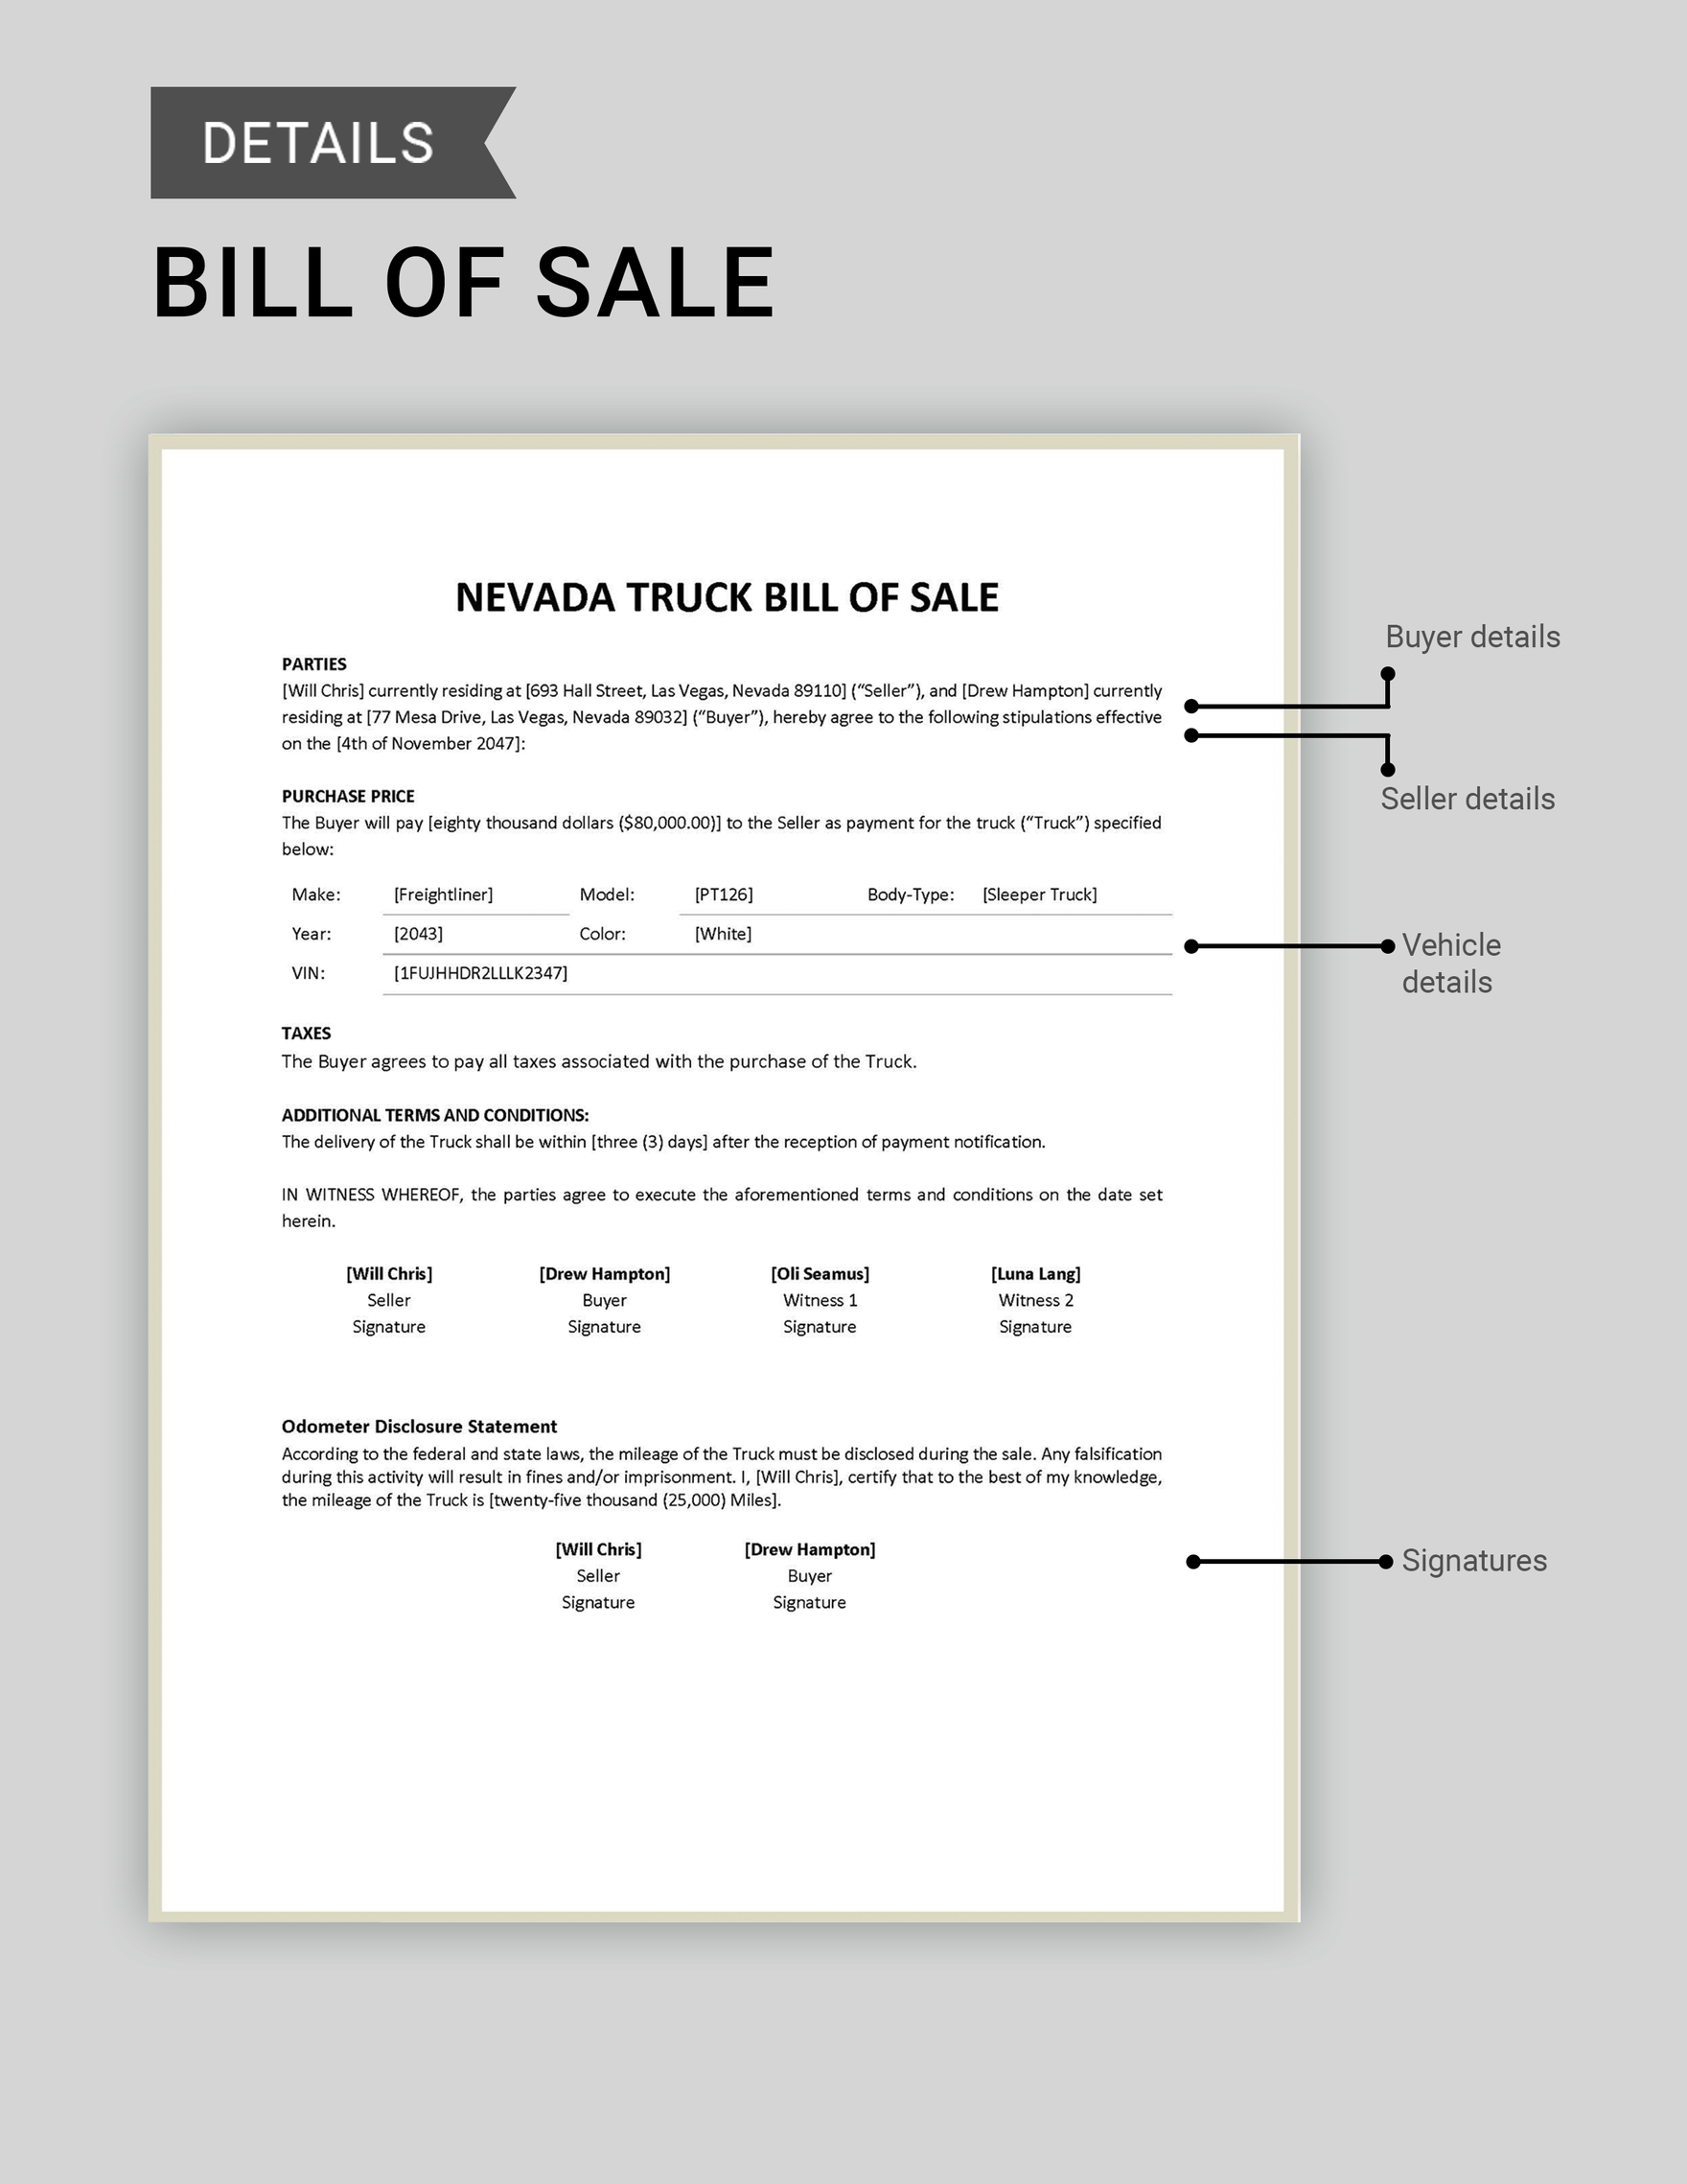 Nevada Truck Bill of Sale Template